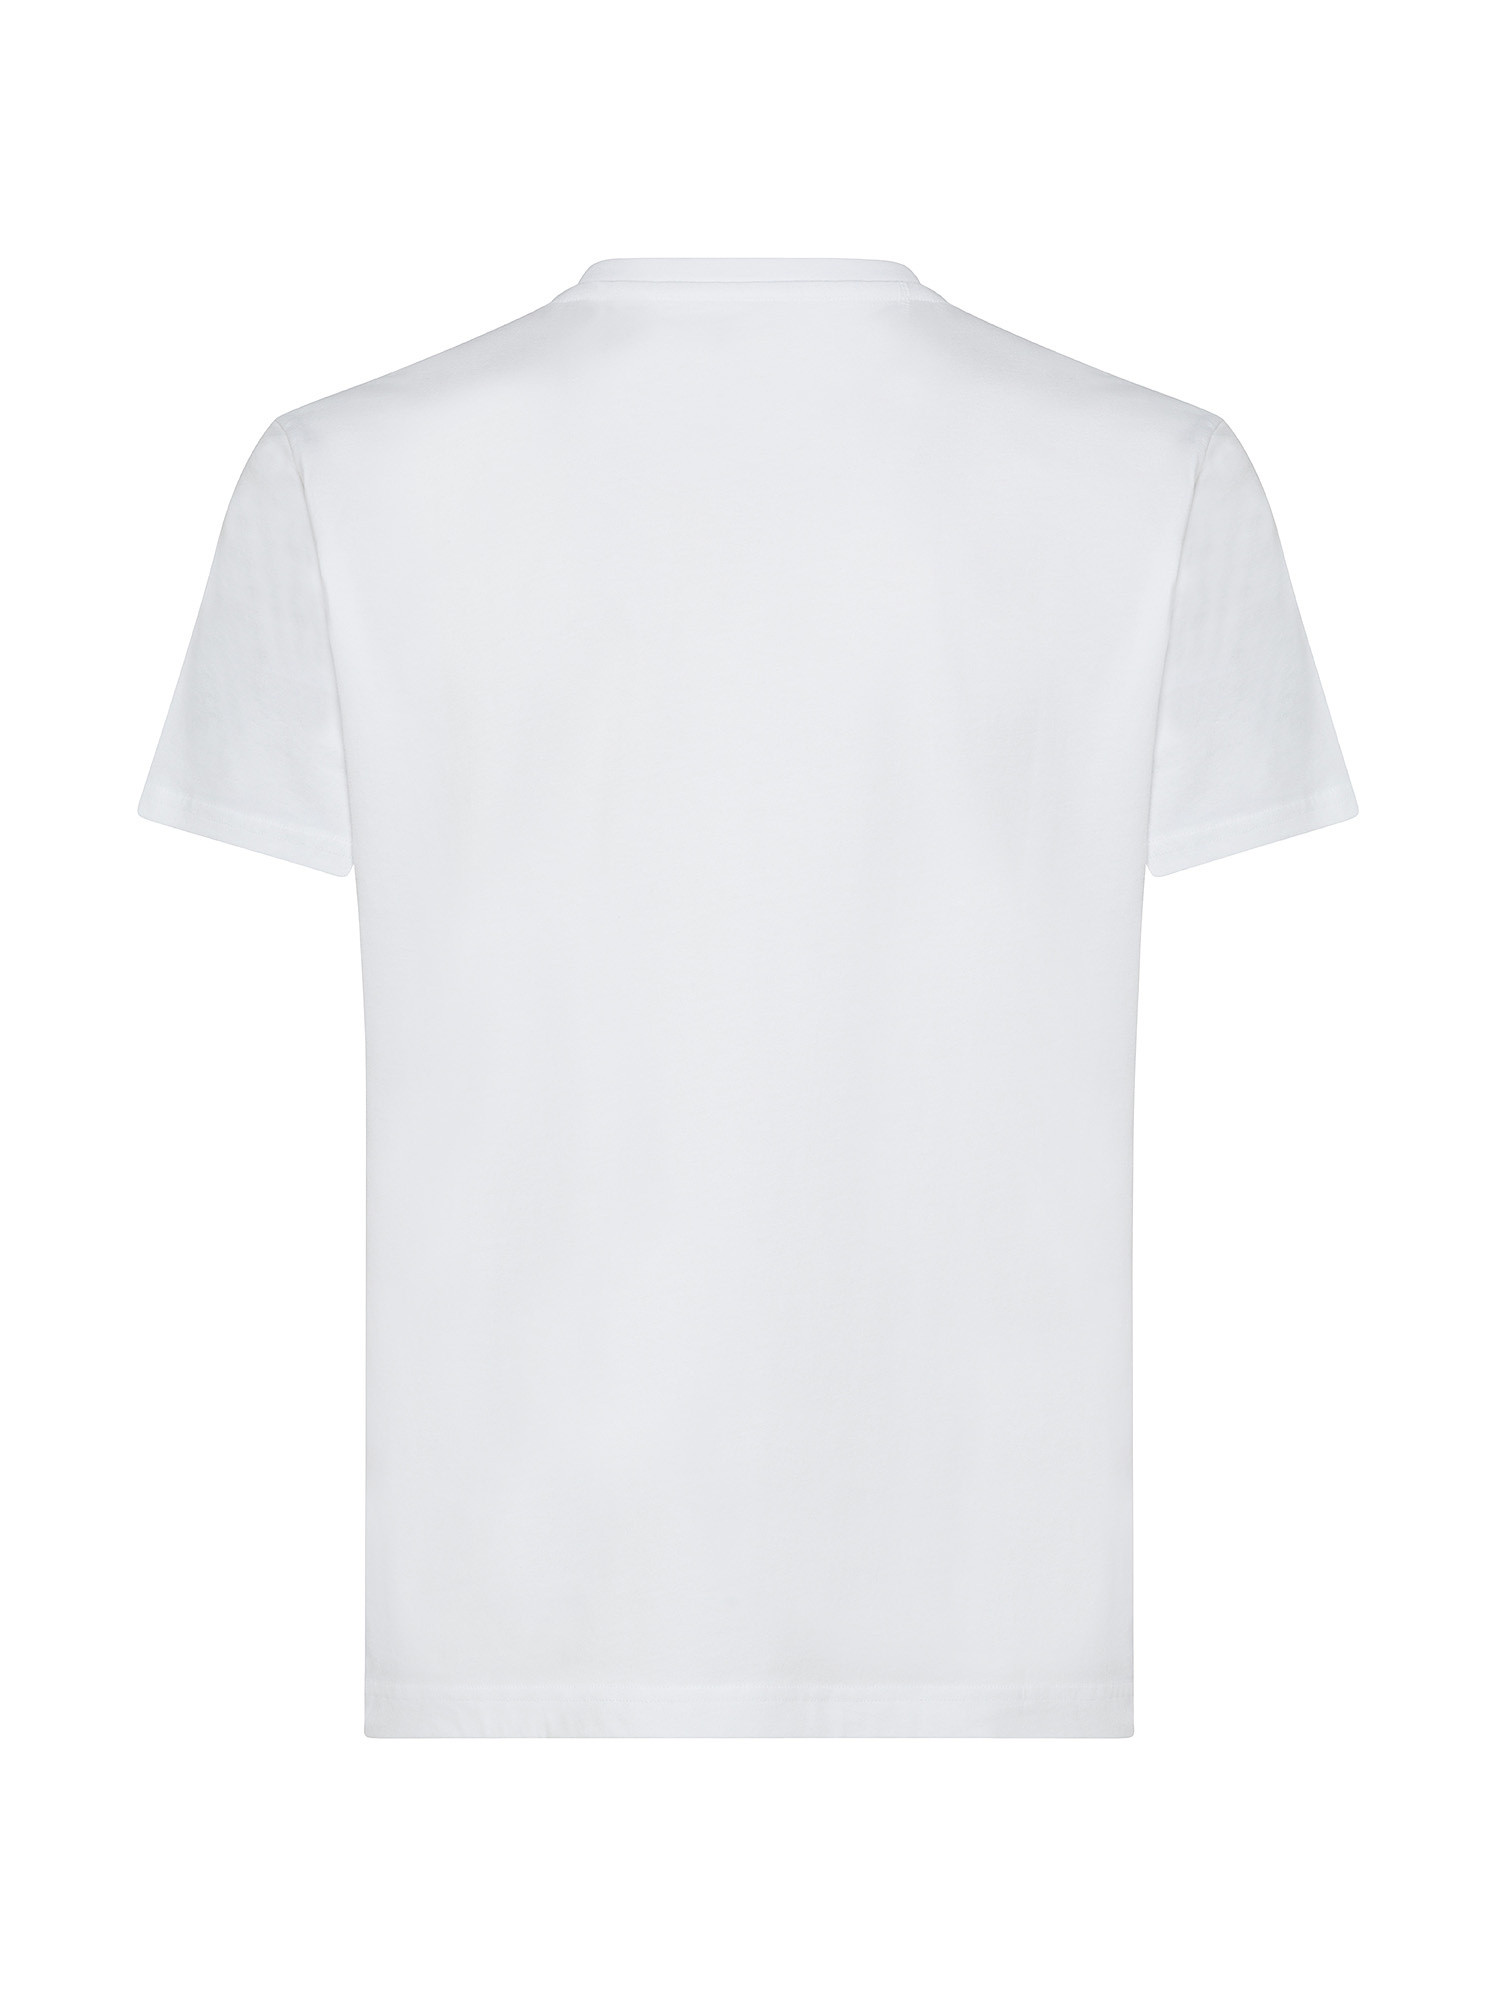 La Martina - T-shirt maniche corte in cotone jersey, Bianco, large image number 1